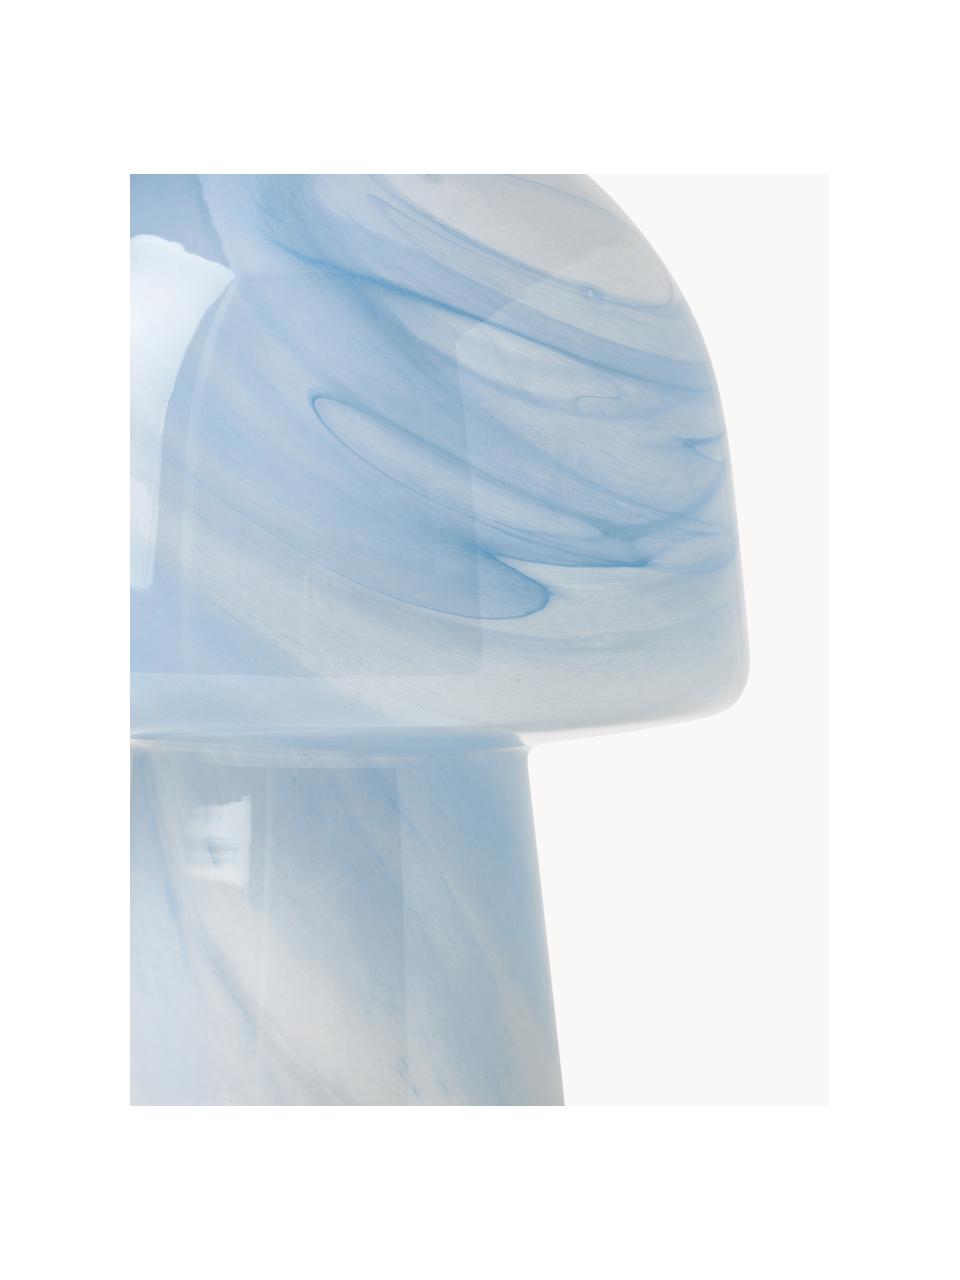 Petite lampe à poser aspect marbre Talia, Aspect marbre bleu ciel, Ø 20 x haut. 26 cm